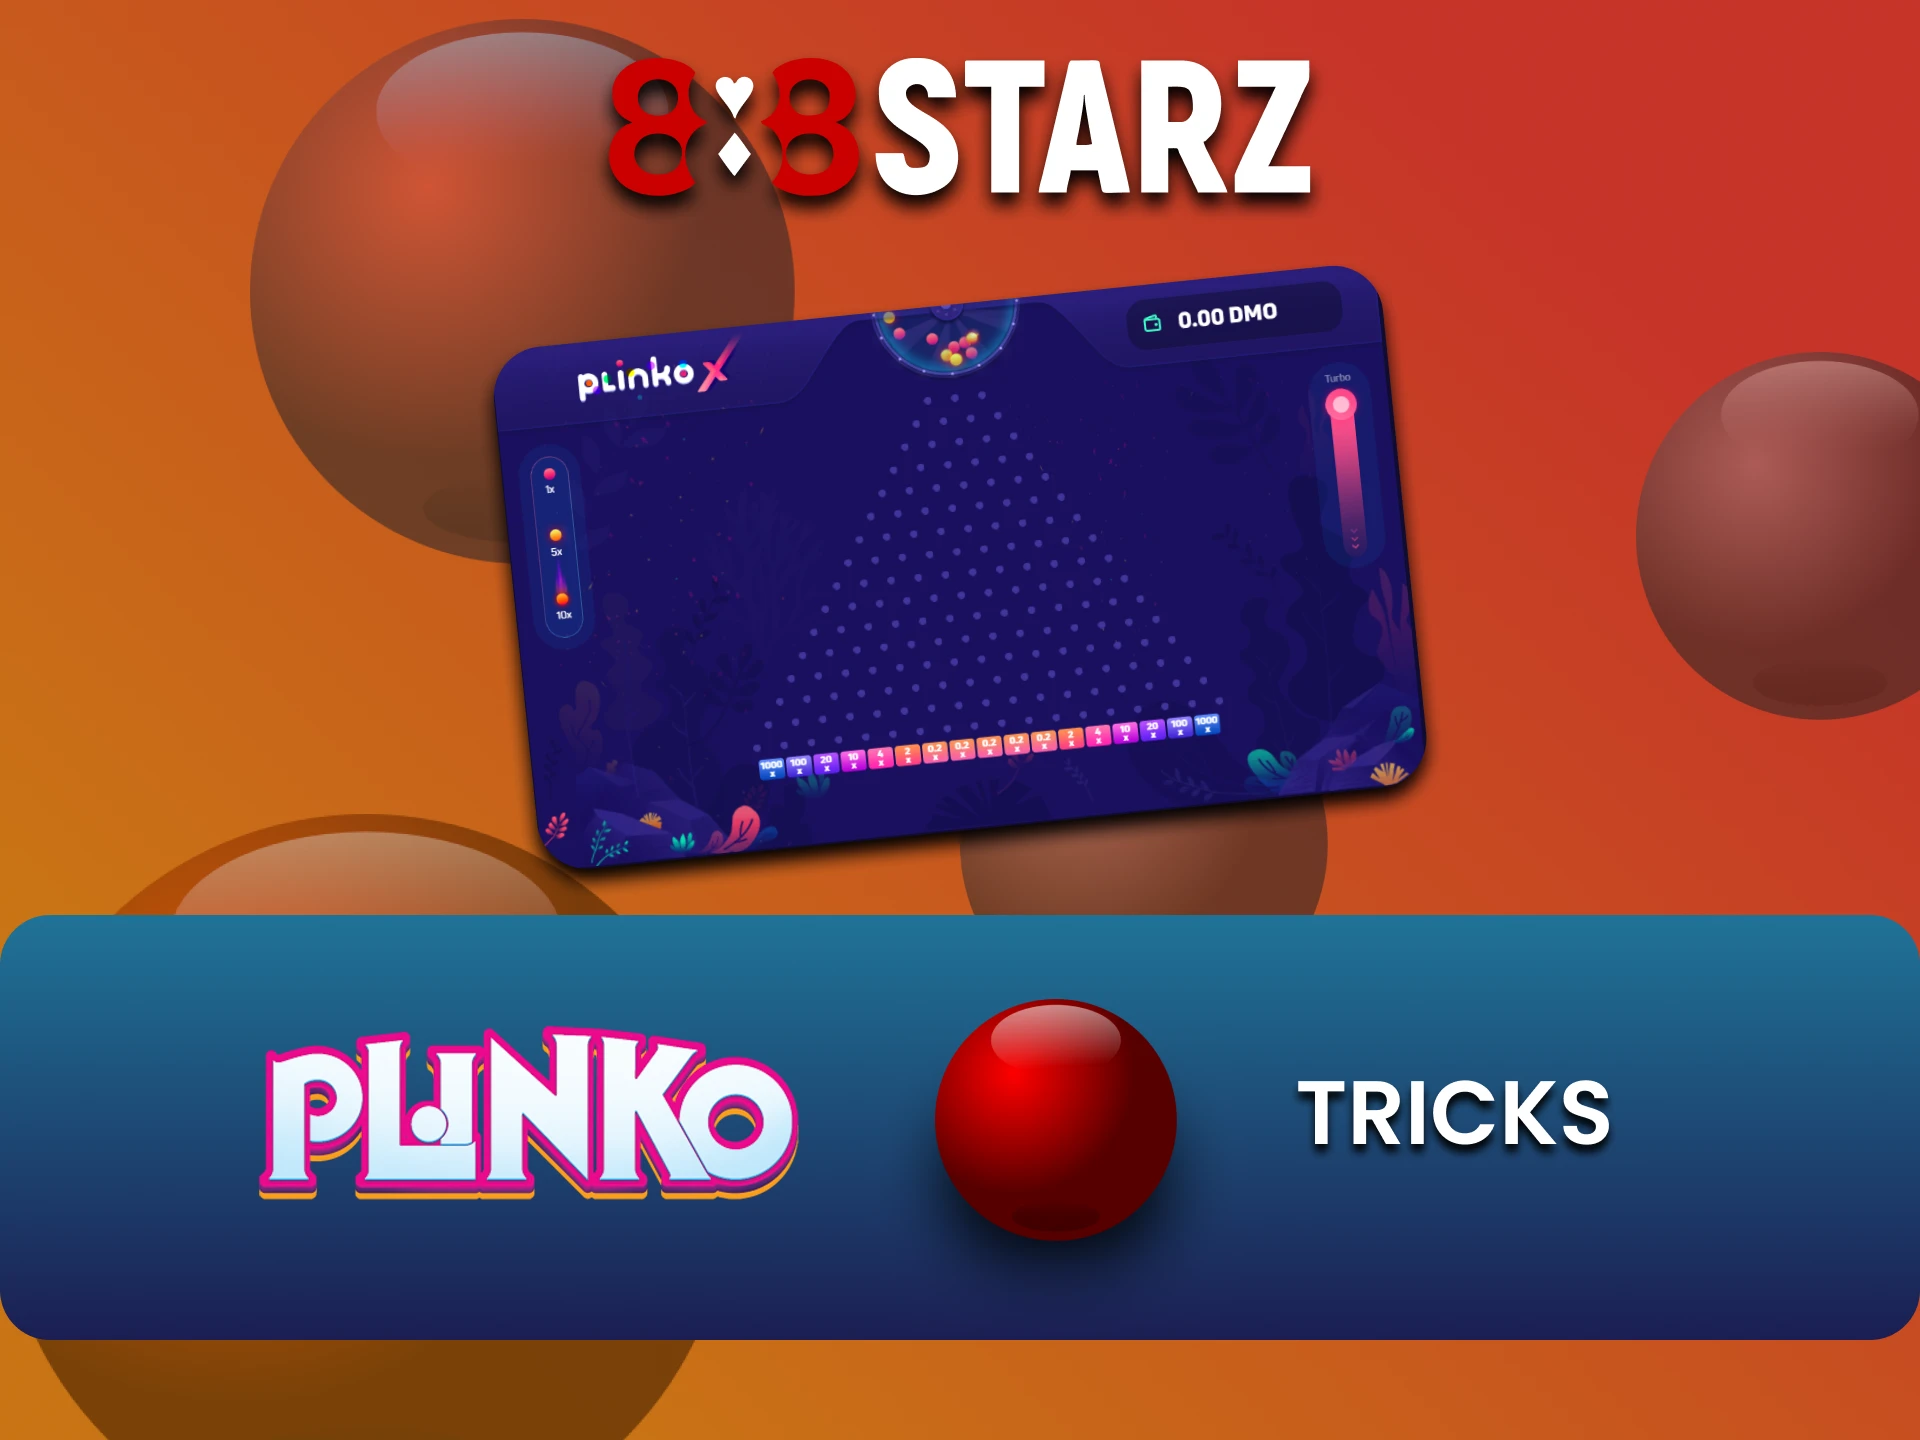 Learn tricks to win Plinko at 888starz.